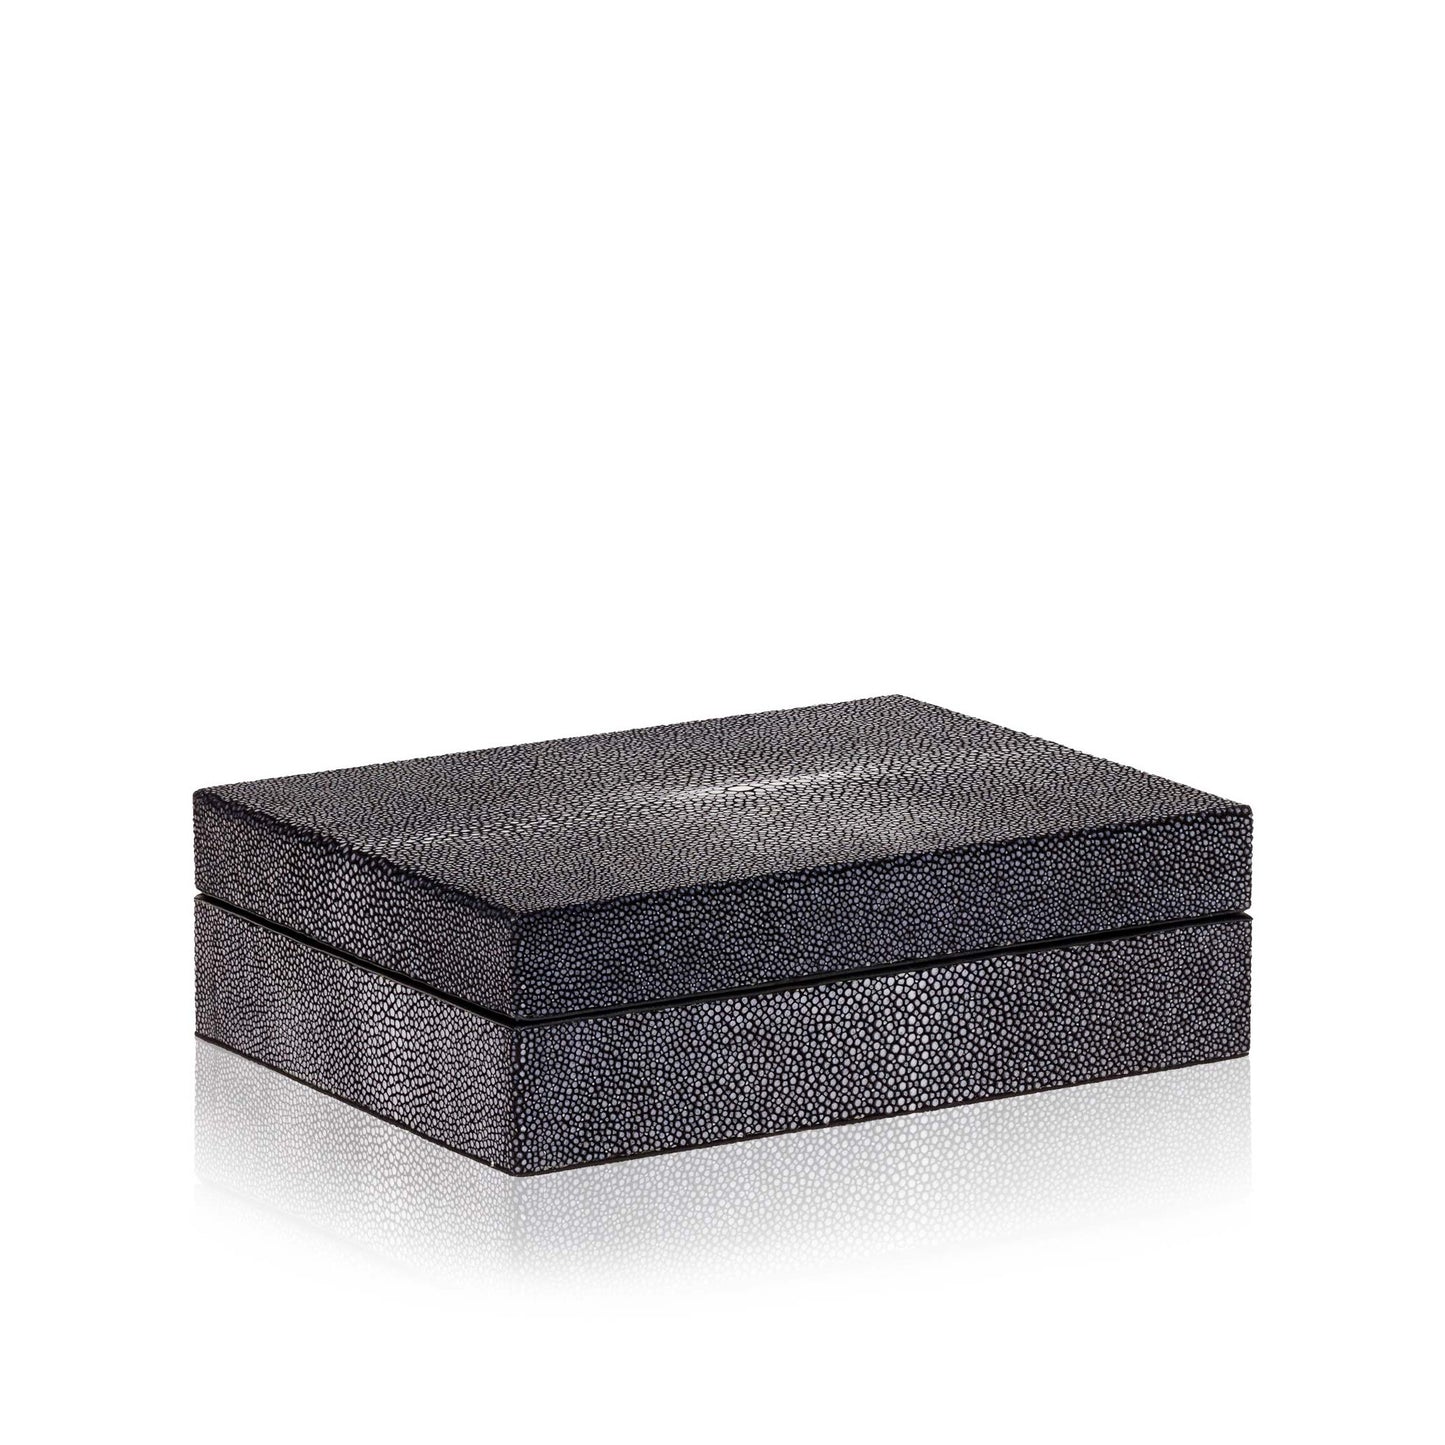 Medium Black Stingray Leather Box